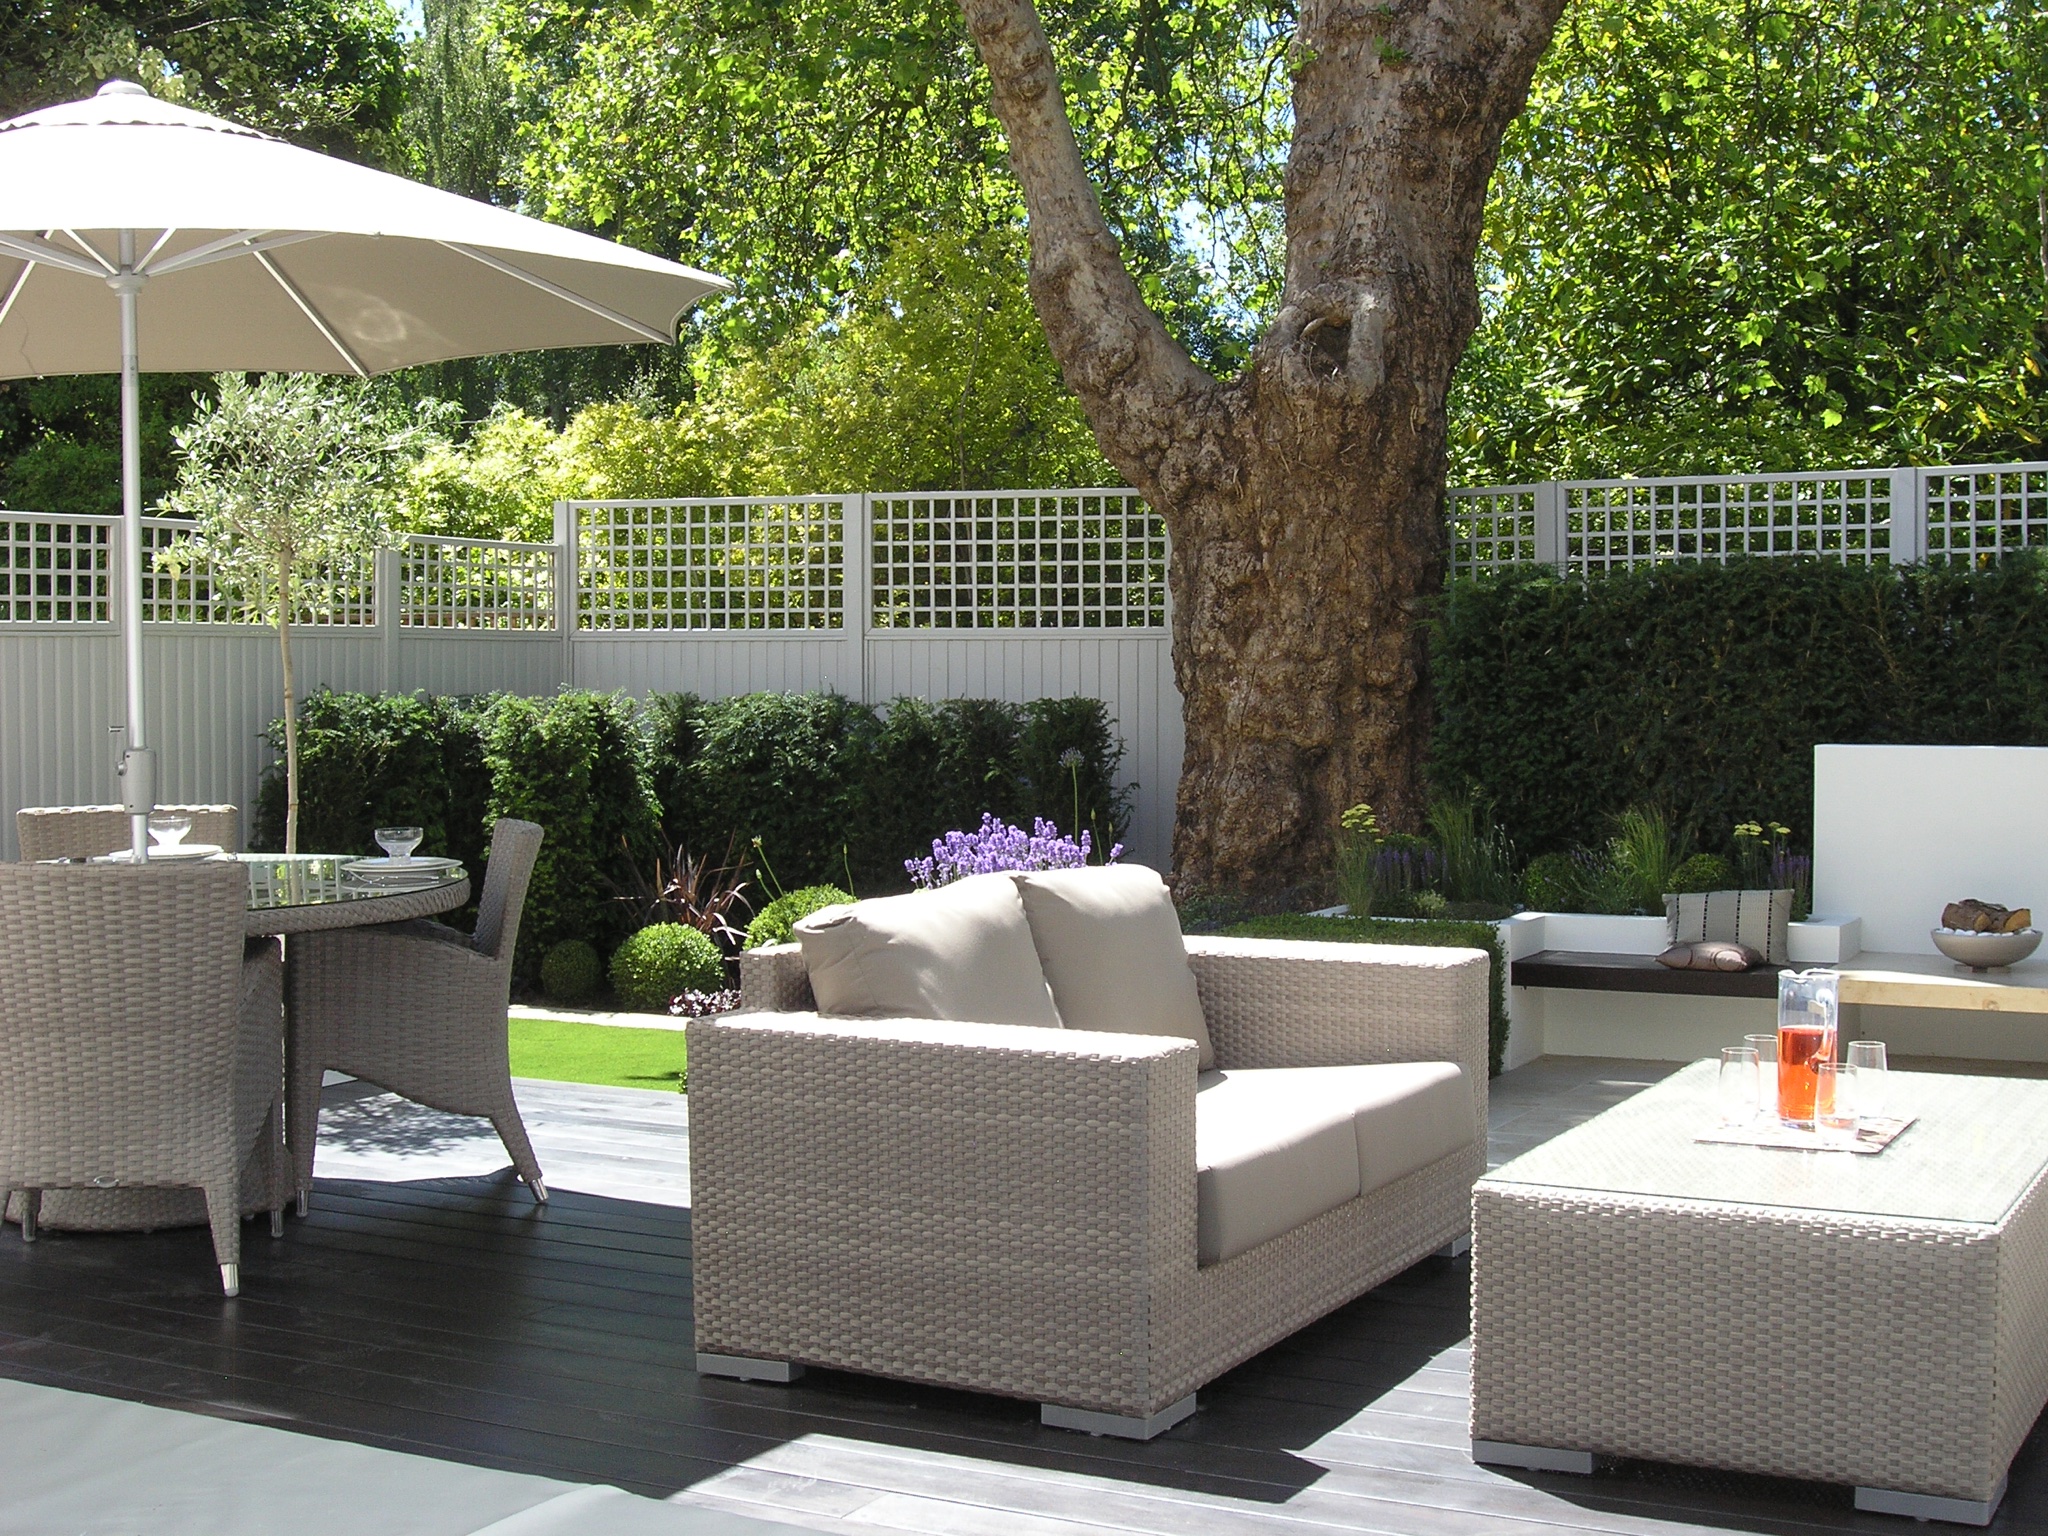 Modern landscaping in London garden with hardwood decking